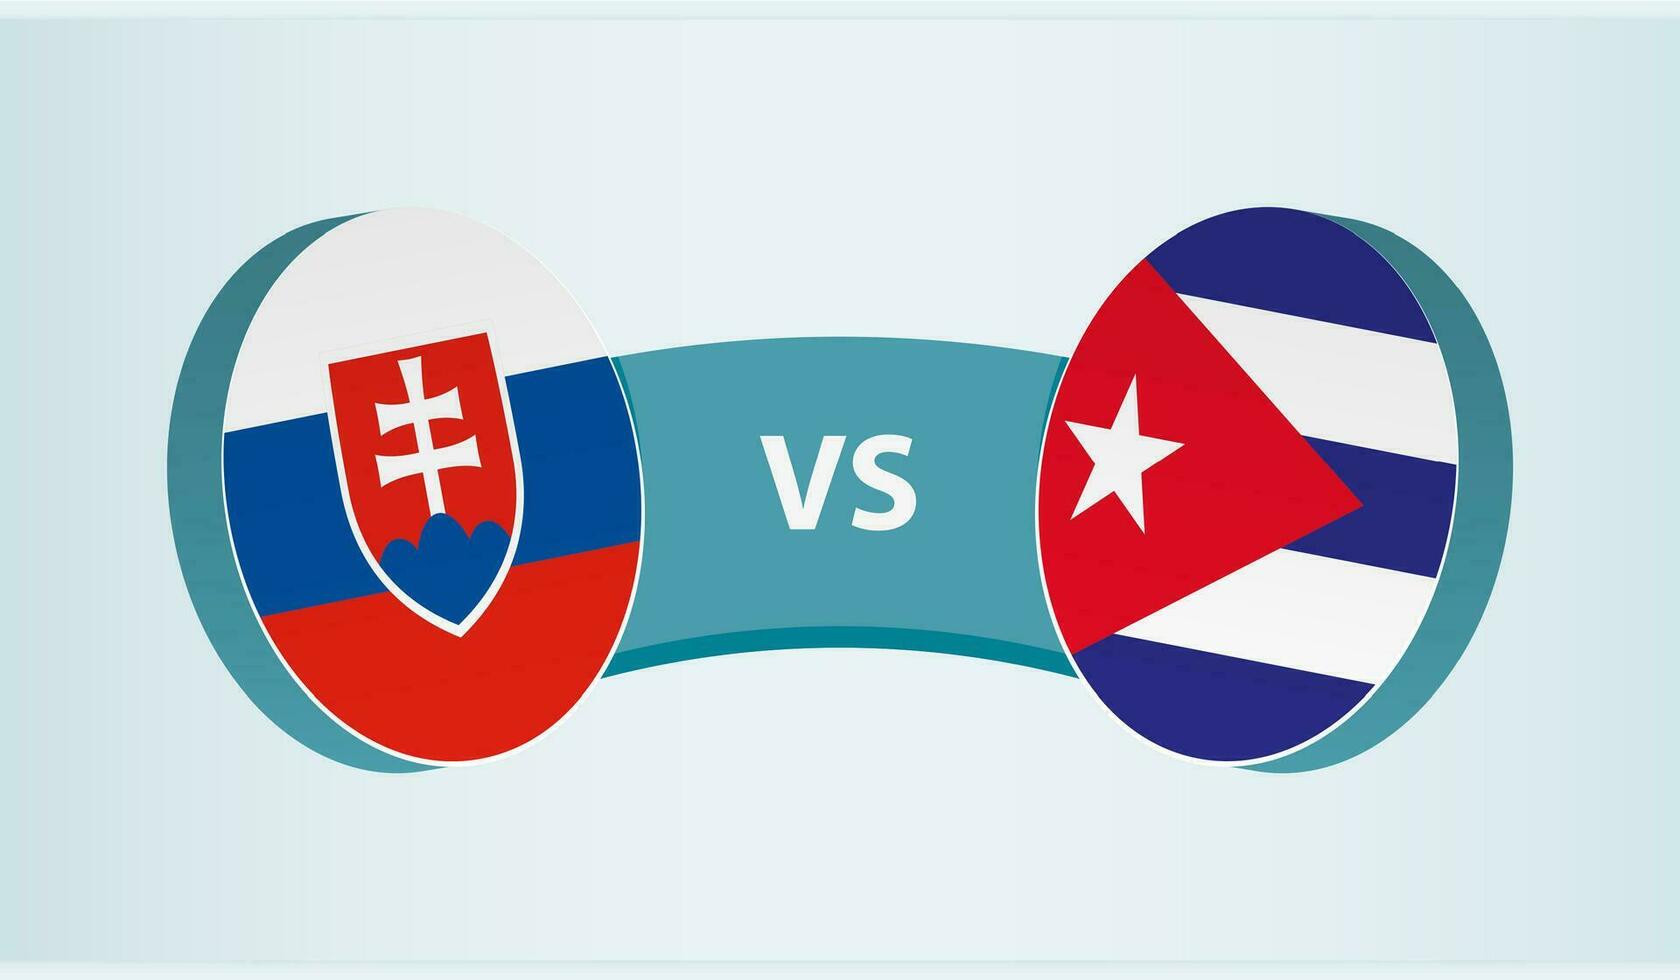 Slovakia versus Cuba, team sports competition concept. vector